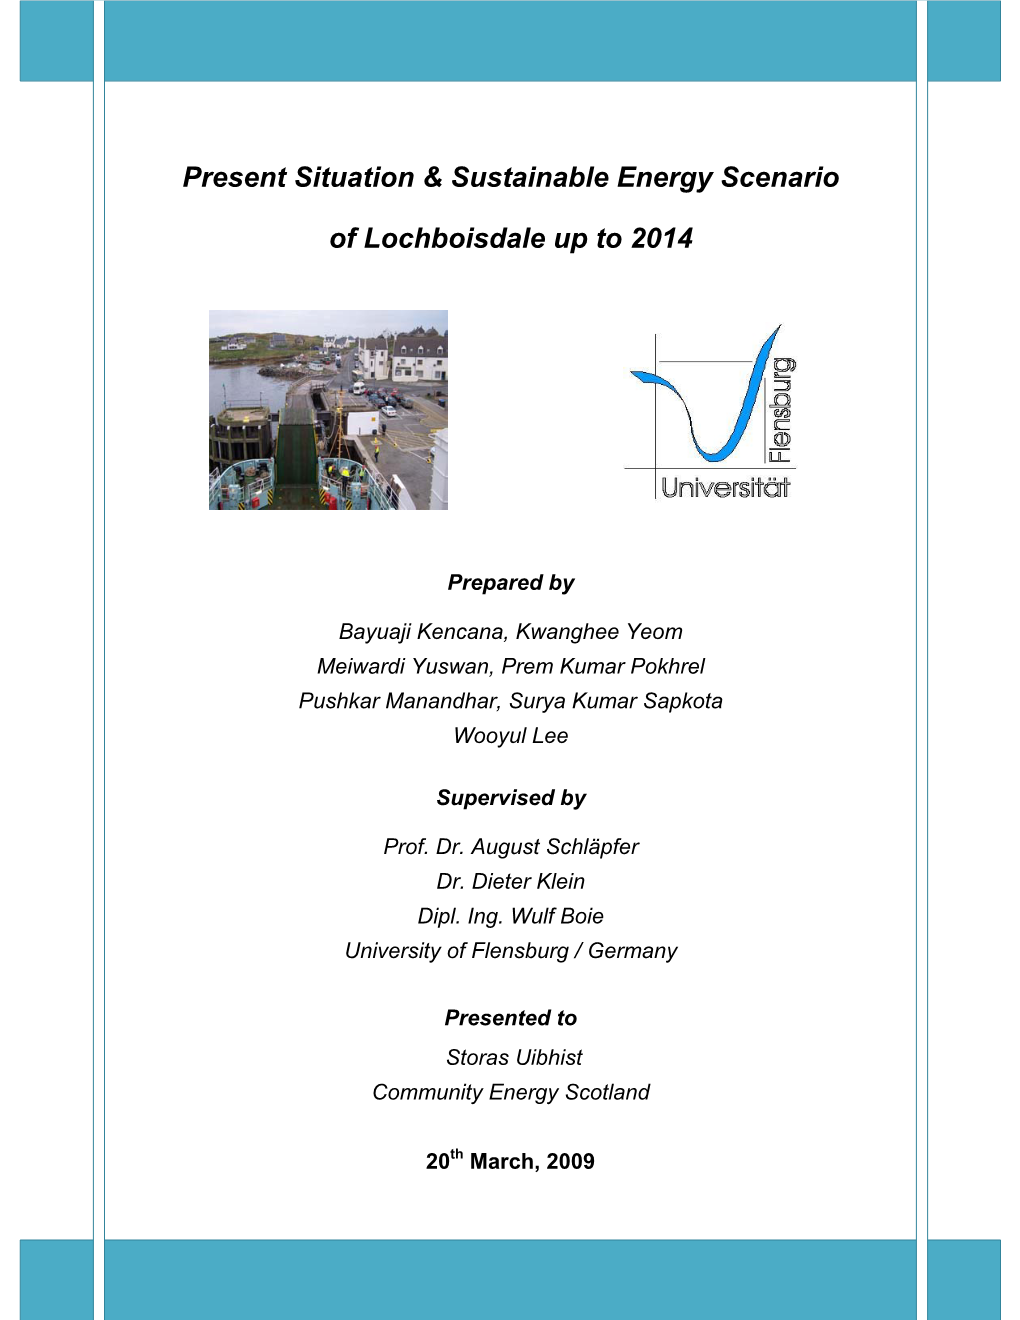 Present Situation & Sustainable Energy Scenario of Lochboisdale